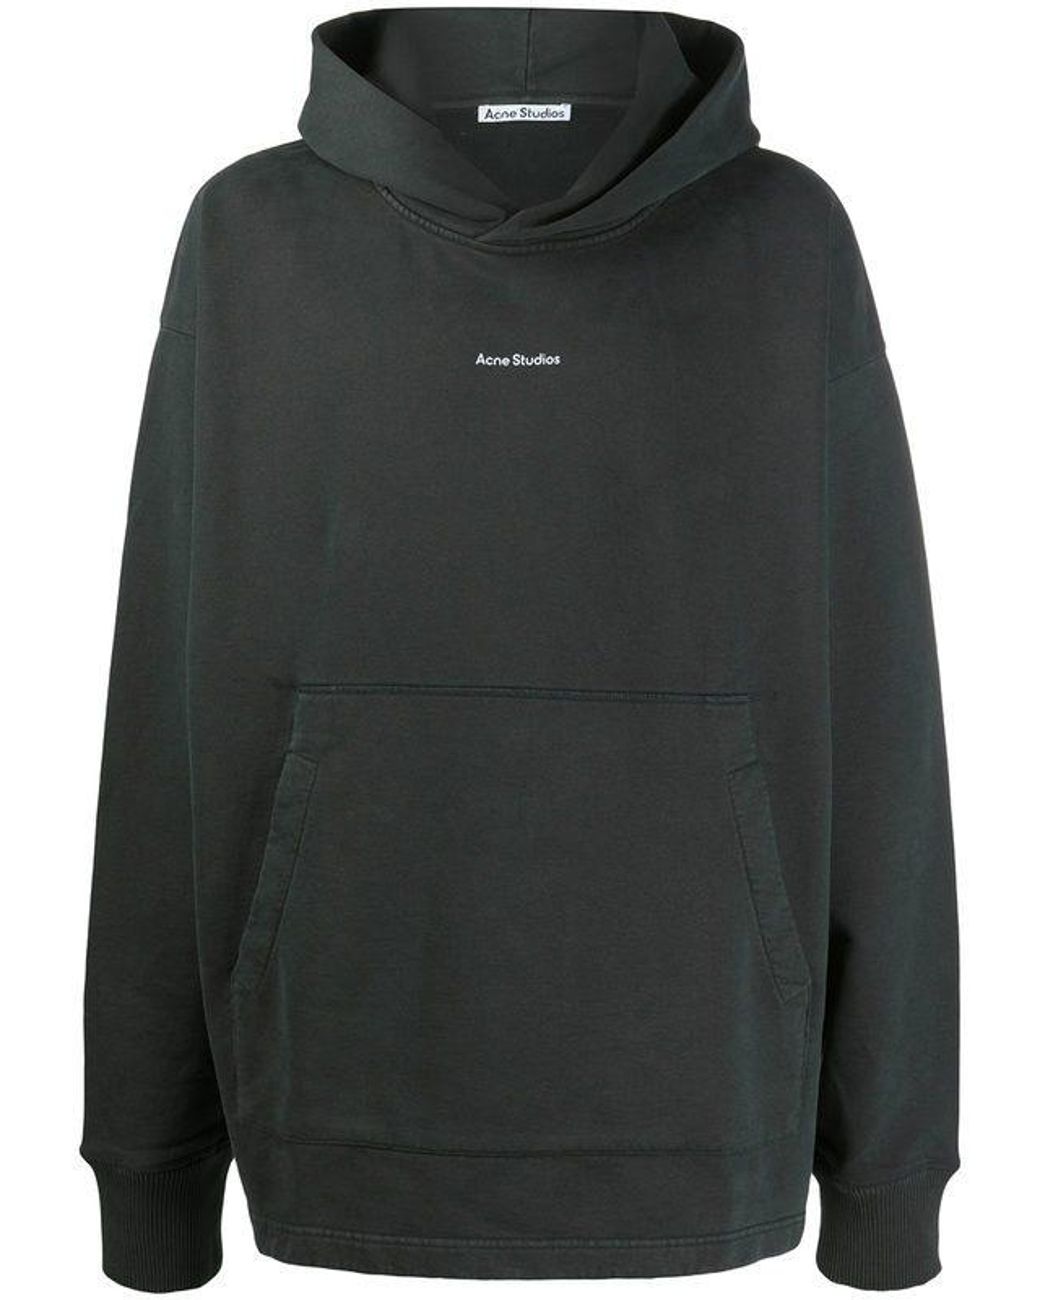 Acne Studios Logo Print Cotton Sweatshirt in Black for Men - Lyst